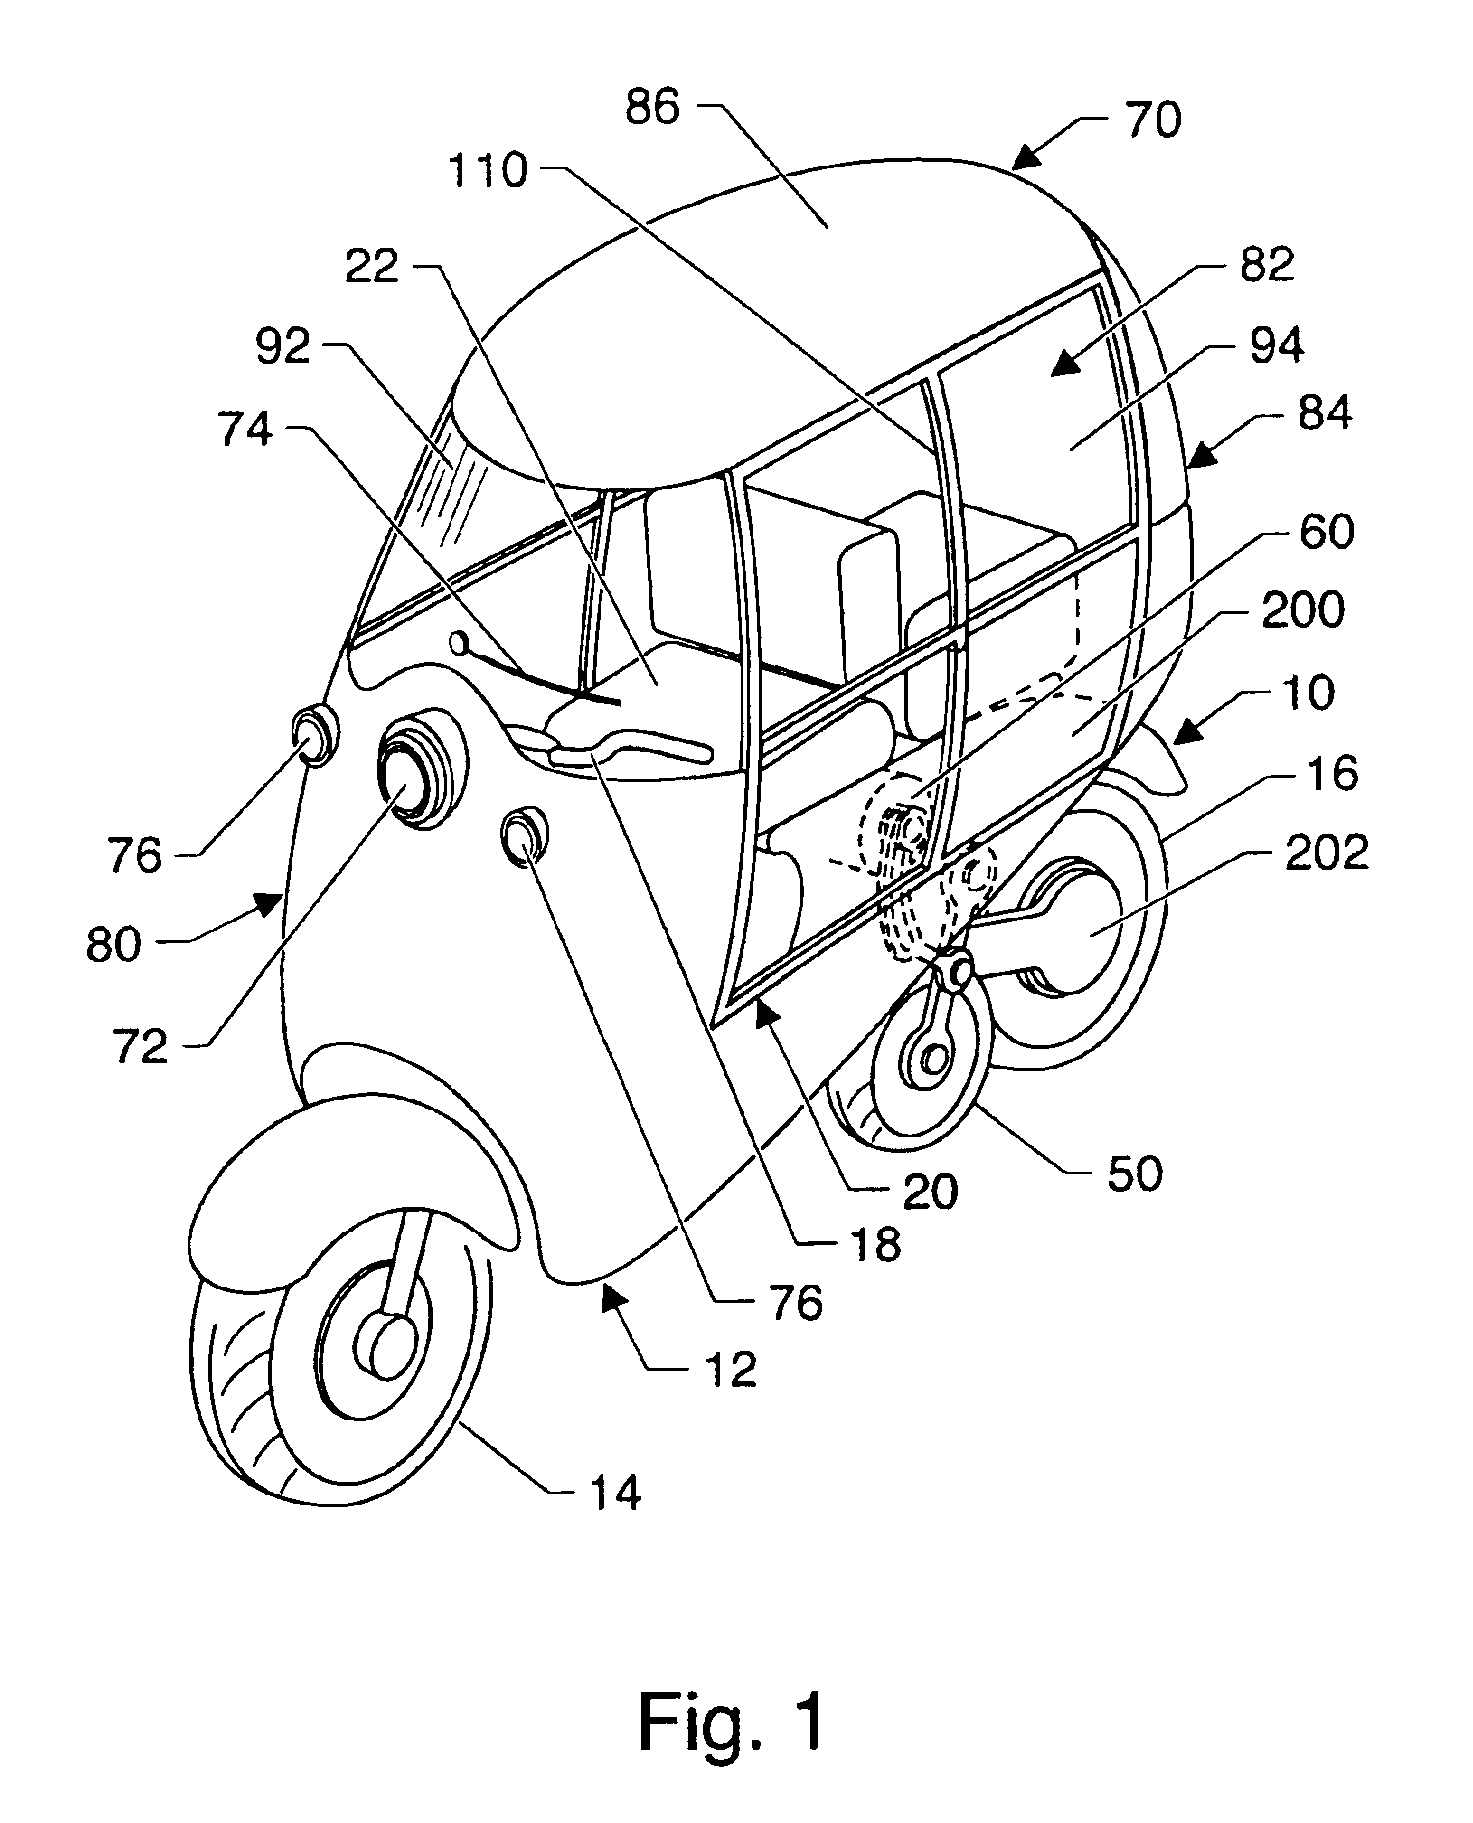 Vehicle of novel configuration and operation